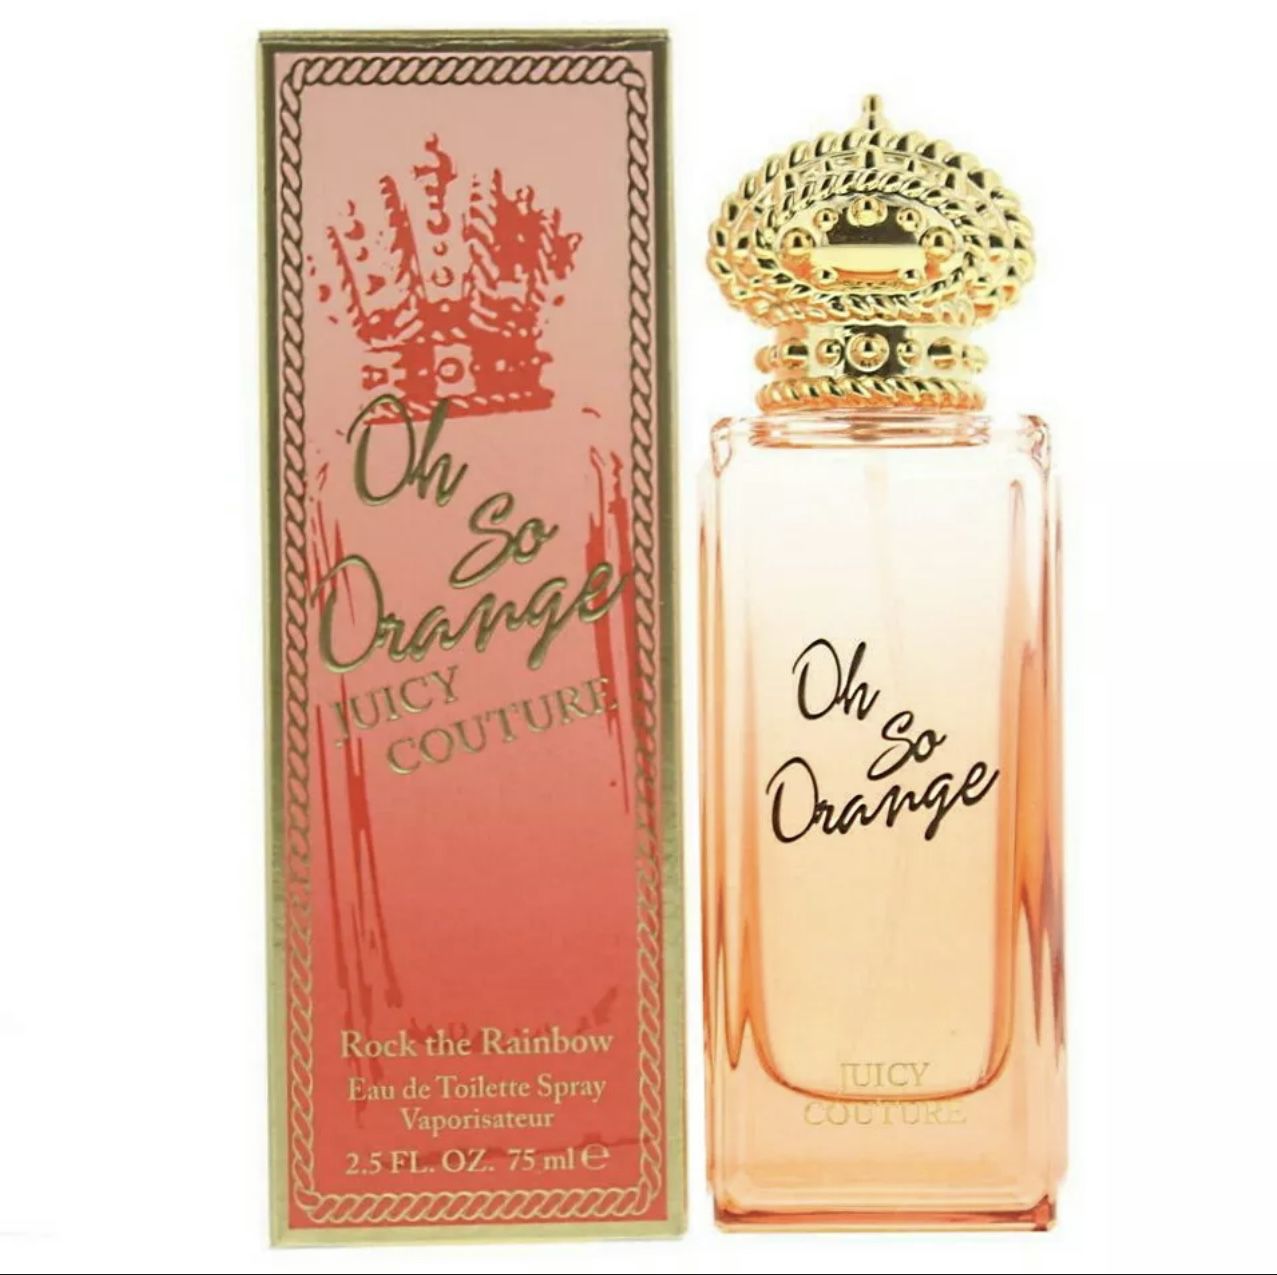 Juicy Couture Oh So Orange Eau De Toilette Spray 75ml/2.5oz Womens Perfume BRAND NEW IN BOX.